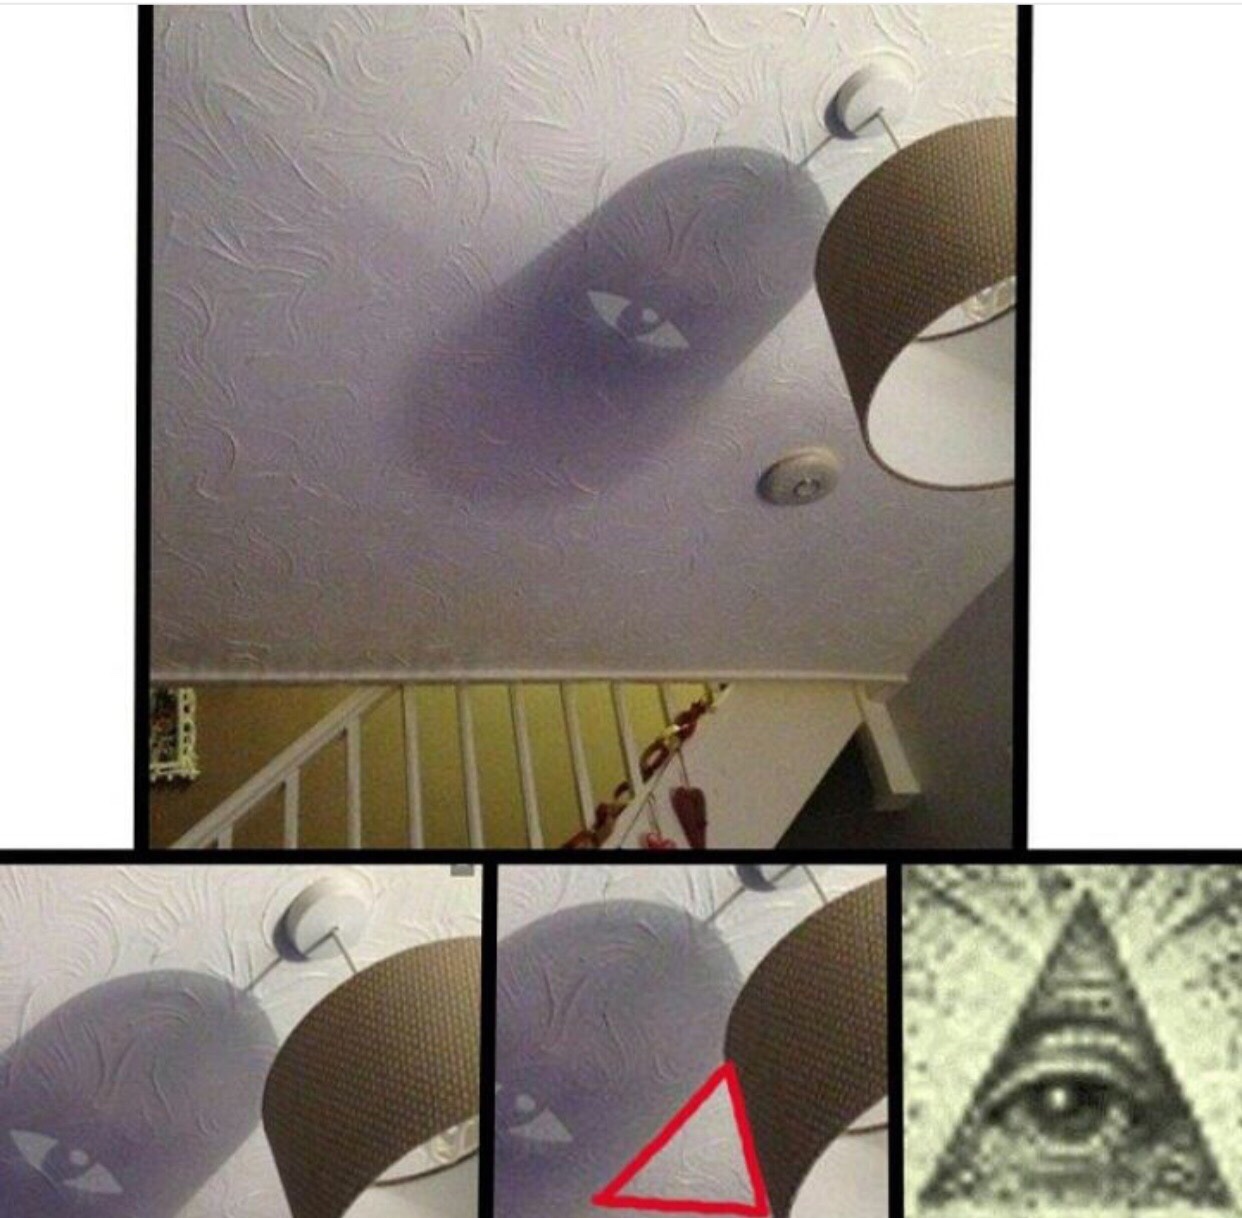 illuminati confirmed - meme